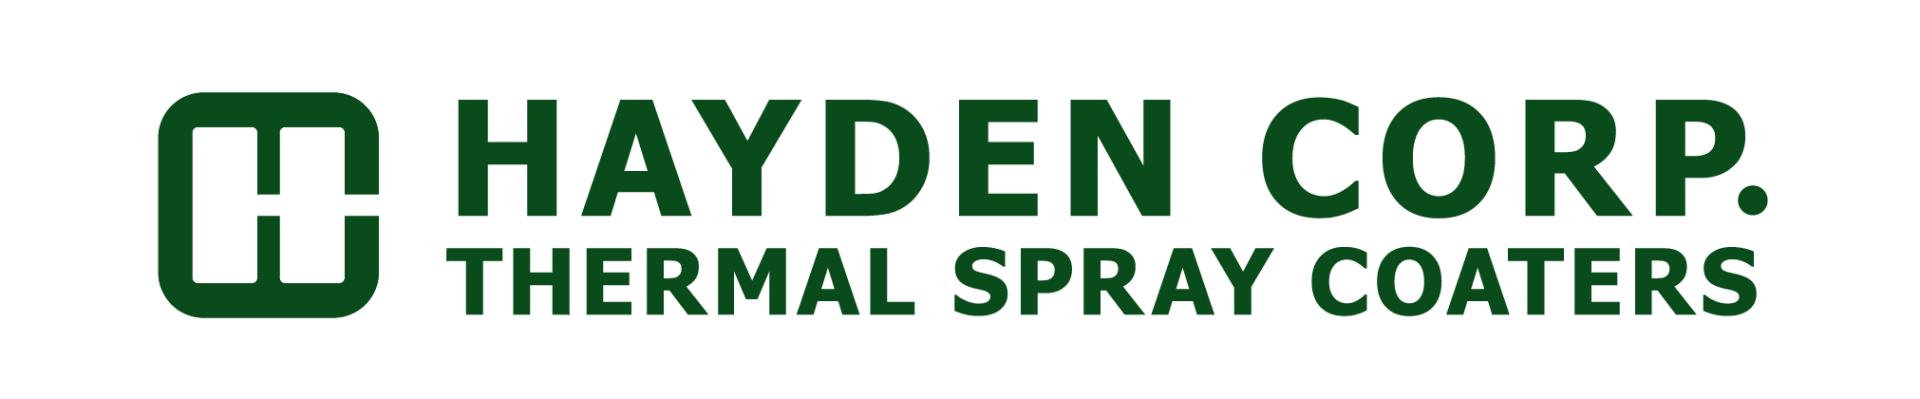 Hayden Corporation Thermal Spray Coaters